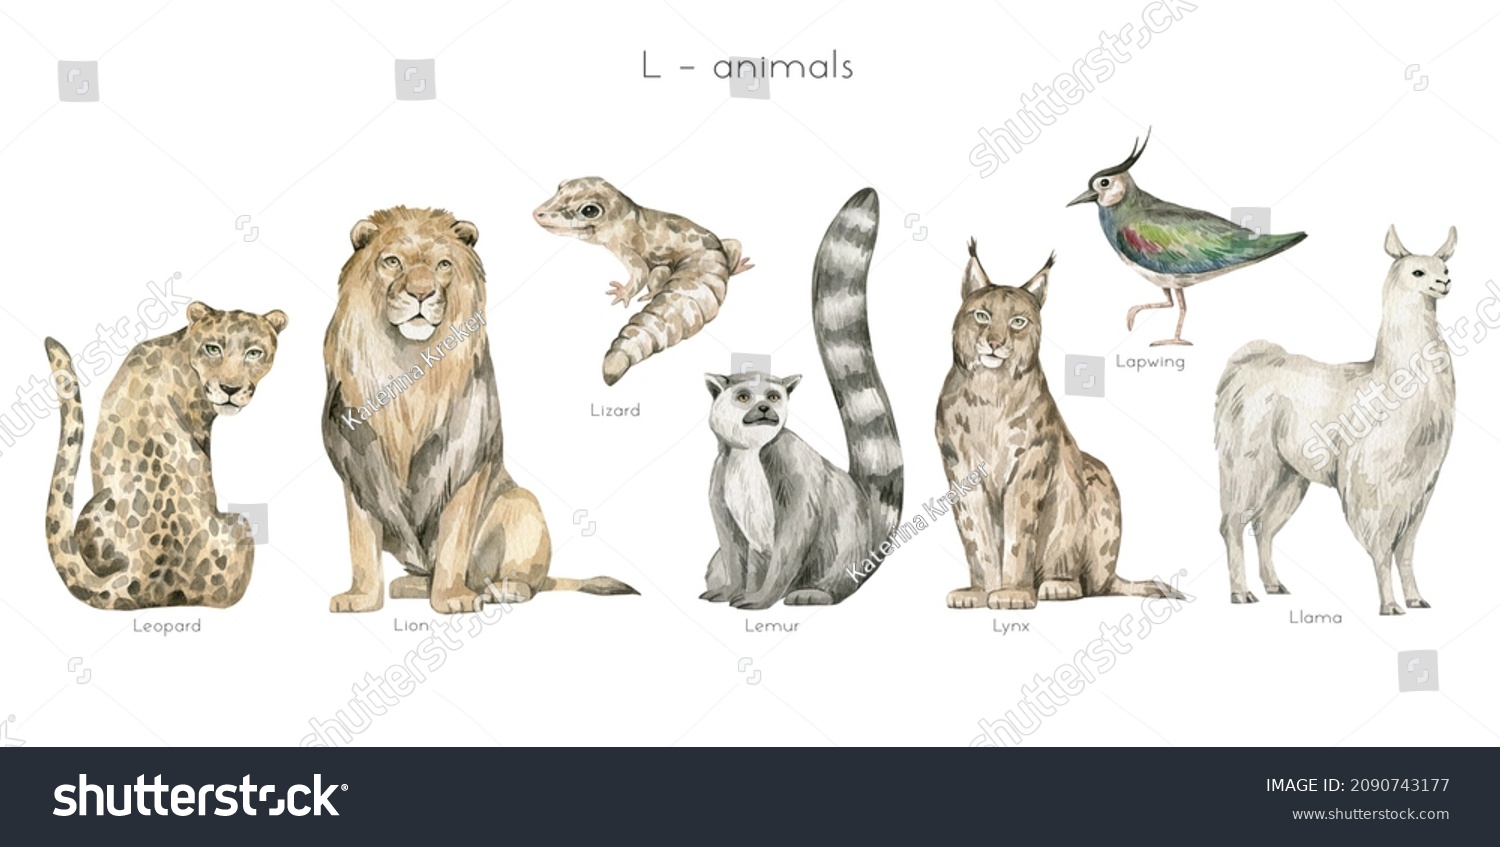 Stock Photo Watercolor Wild Animals Letter L Leopard Lion Lizard Lemur Lynx Lapwing Bird Llama Zoo 2090743177 